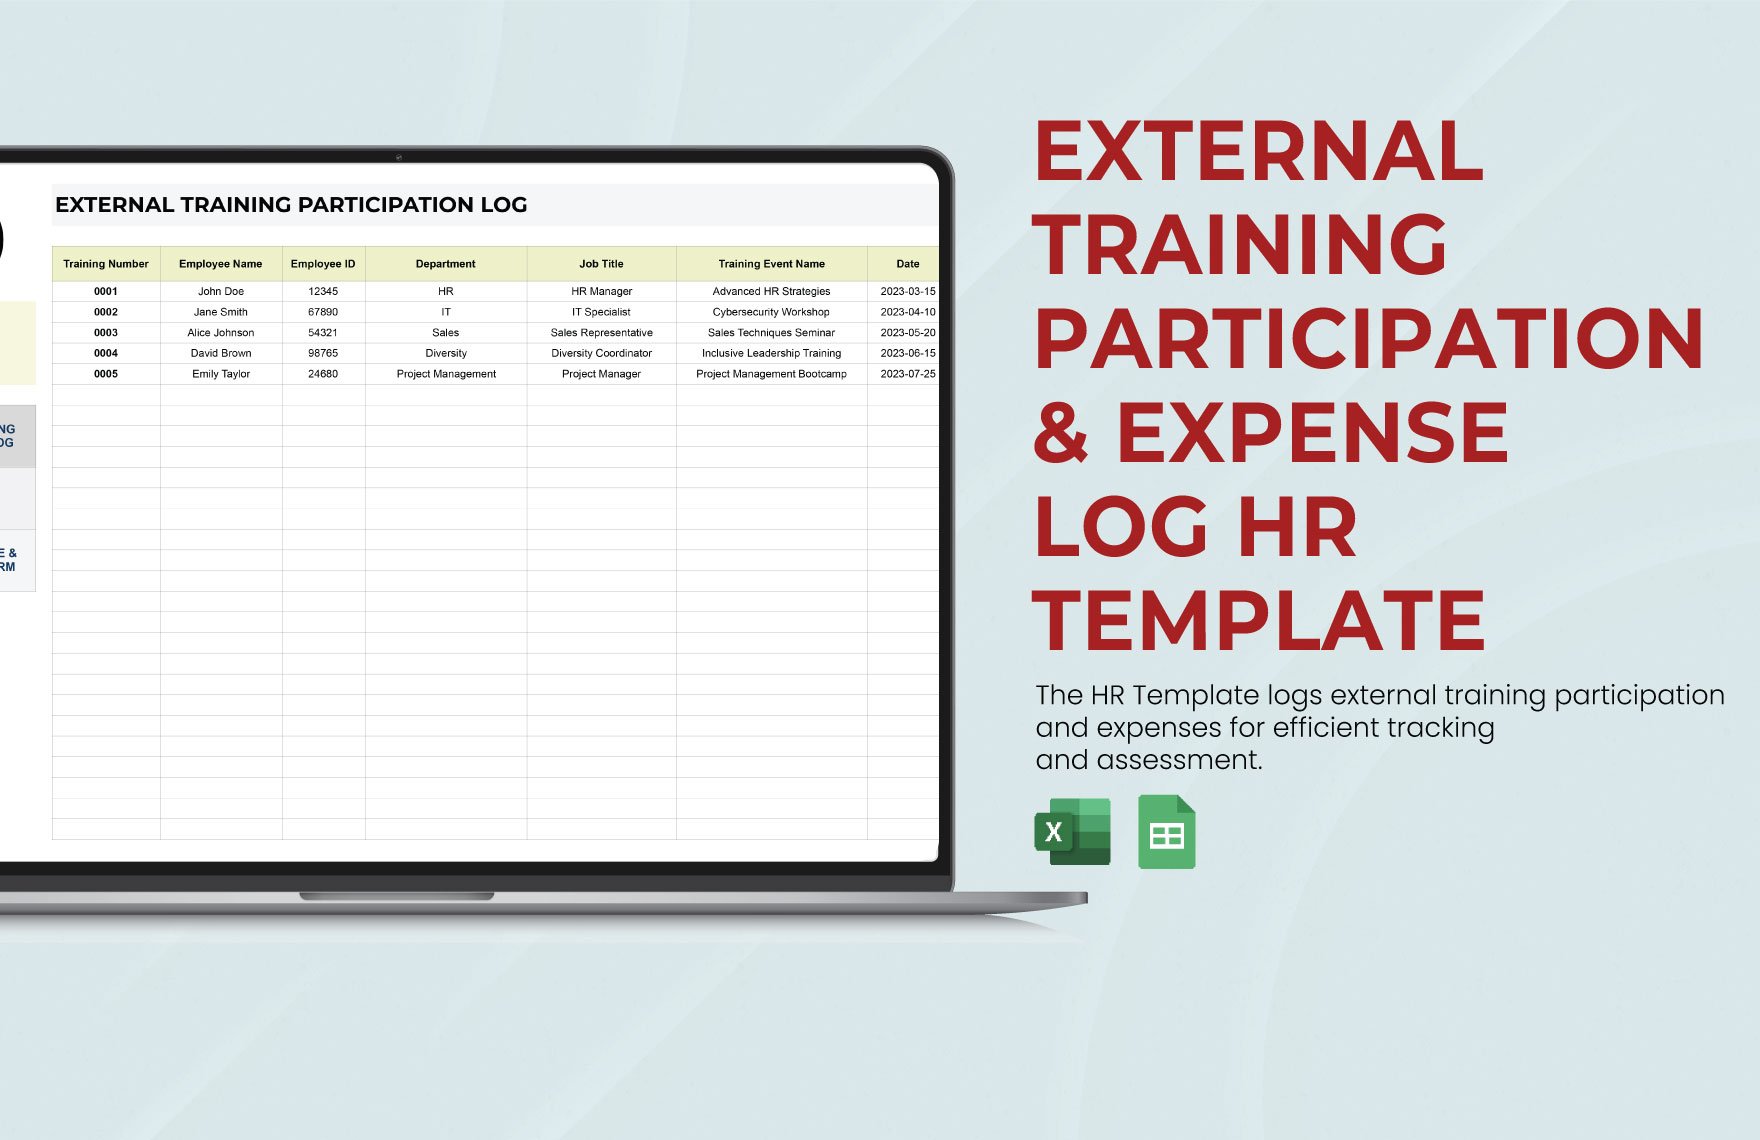 External Training Participation & Expense Log HR Template